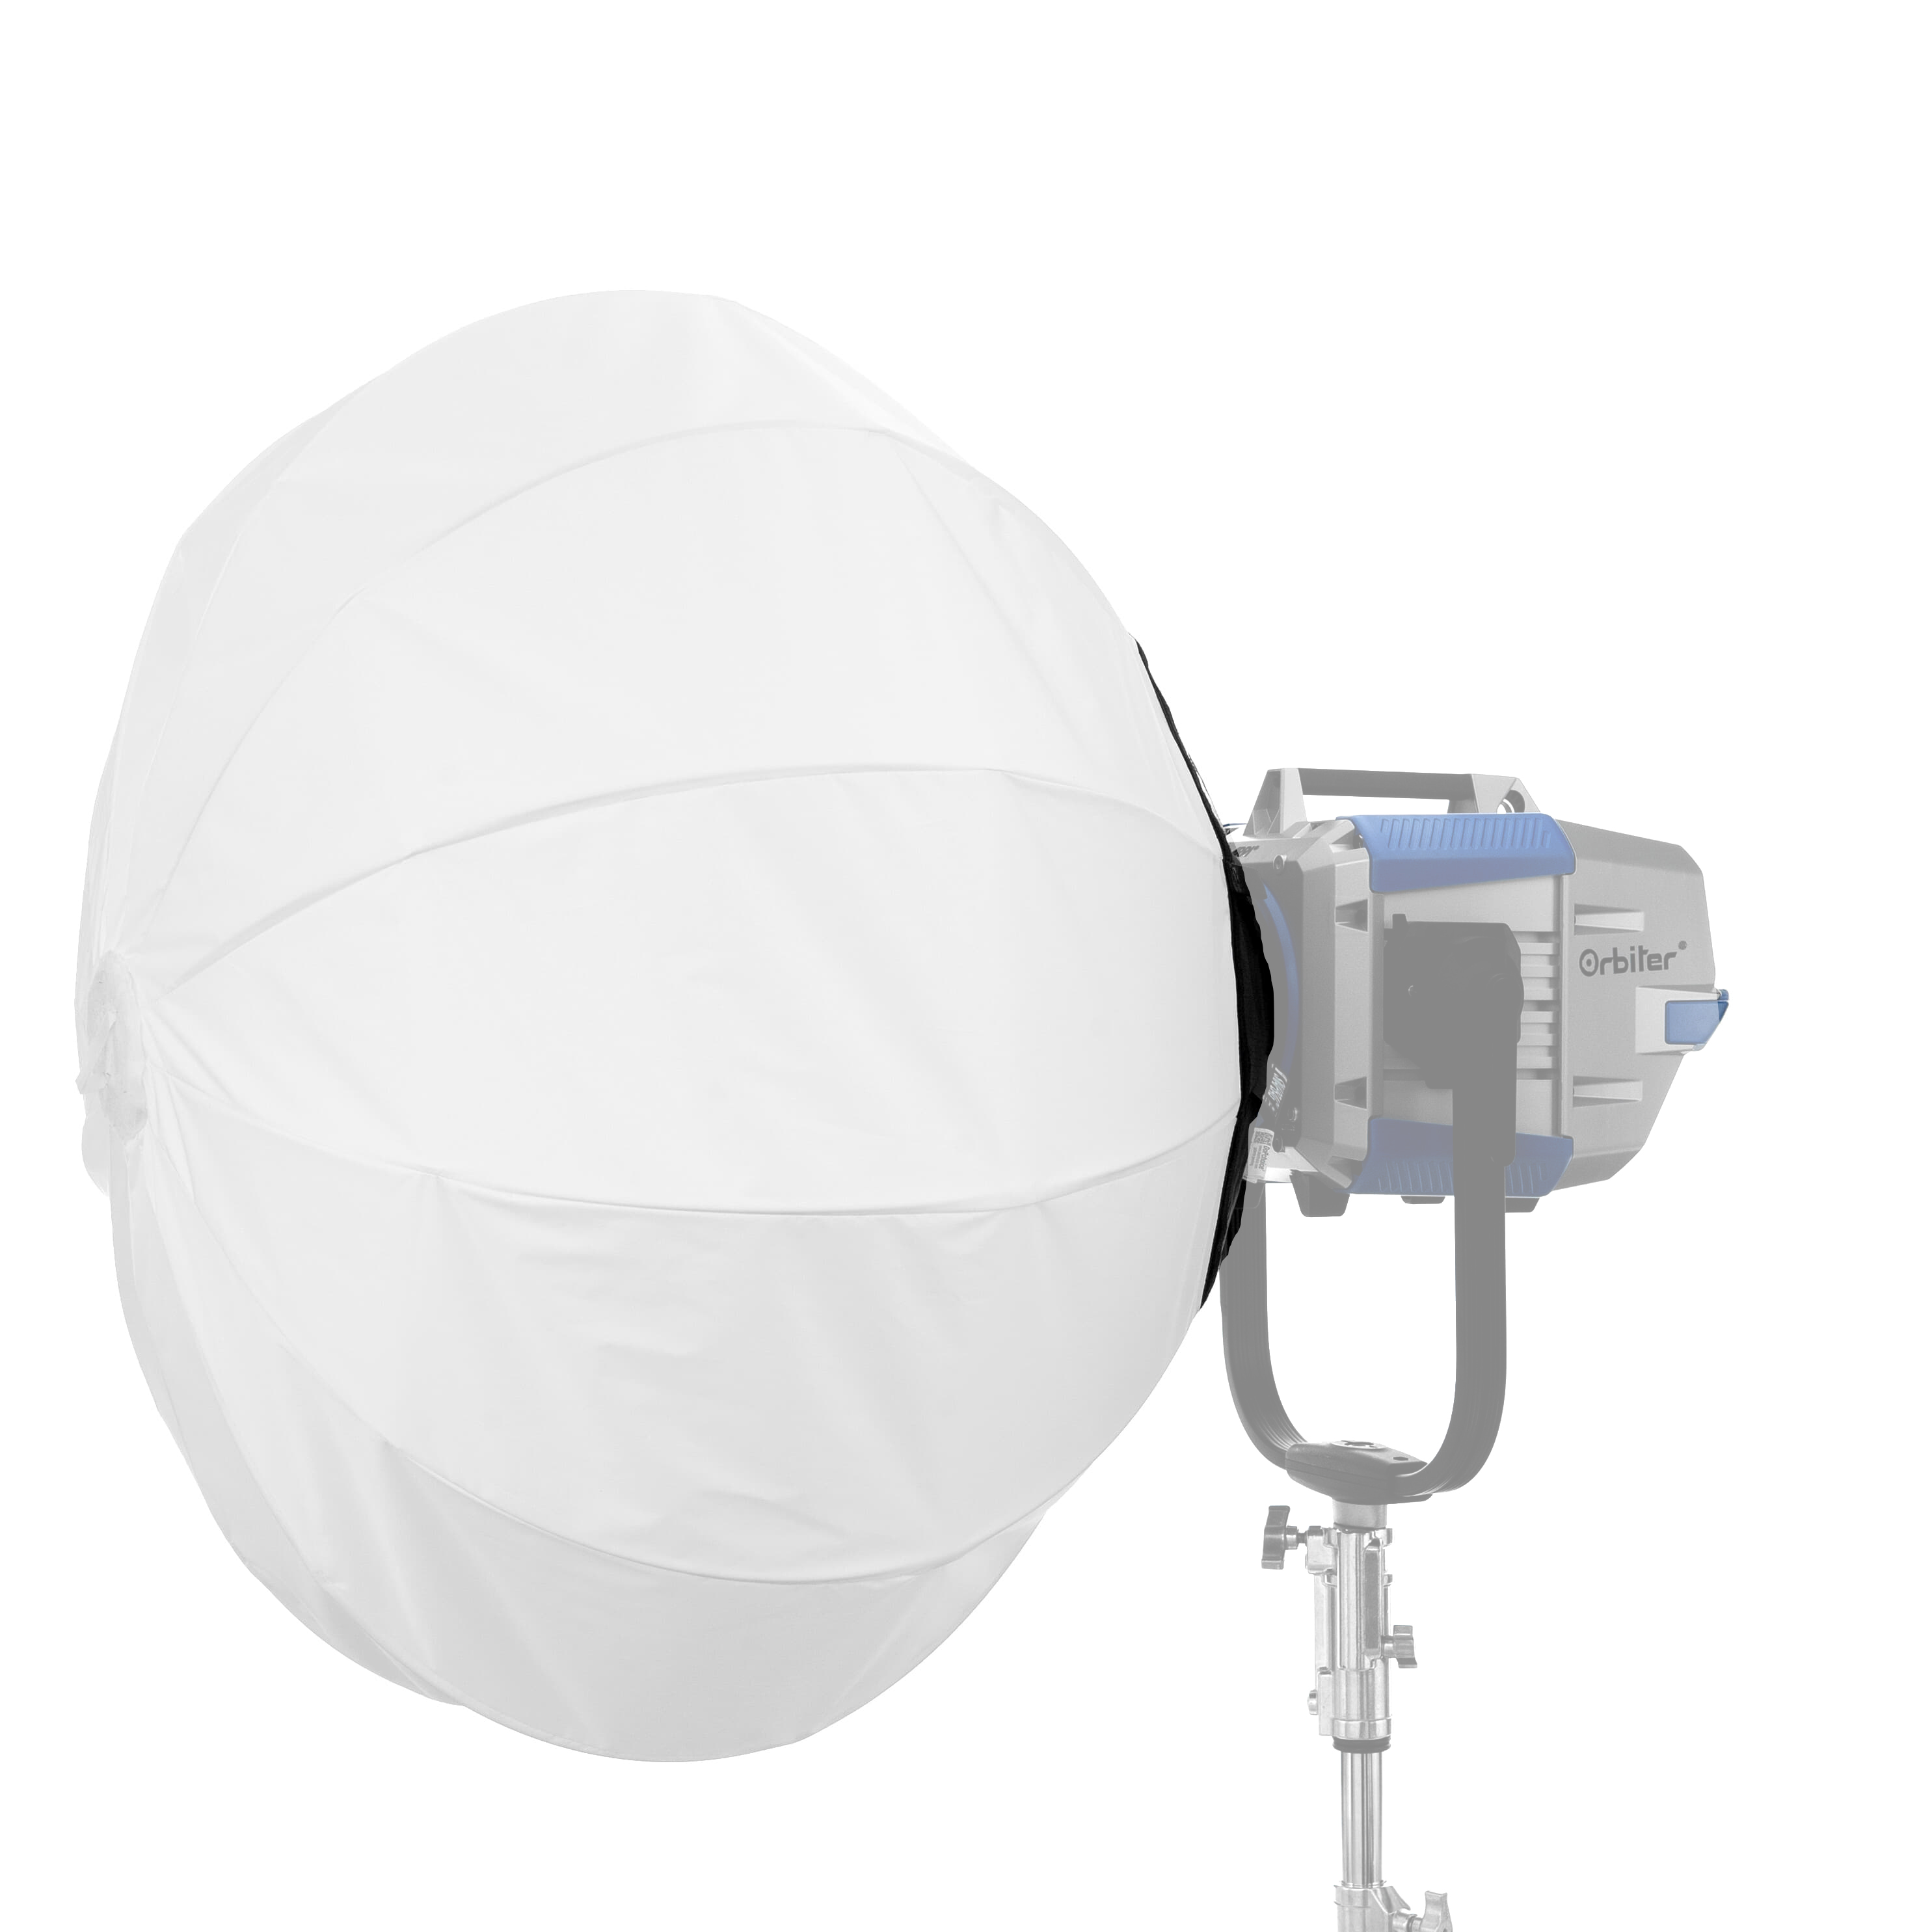 DOP Choice SnapBag Dome L - Arri Orbiter Kit